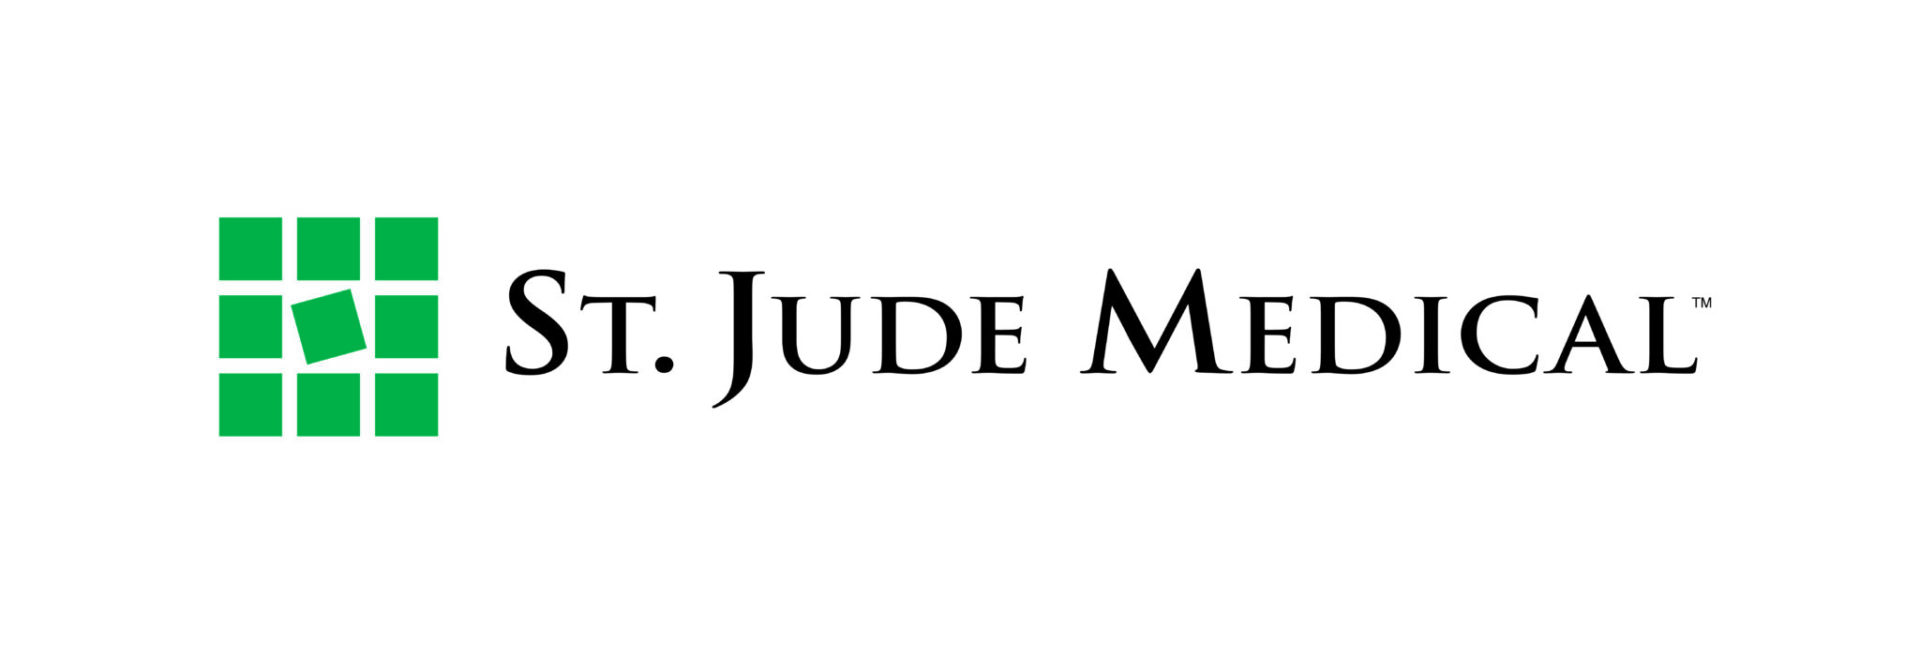 St Jude. Medical